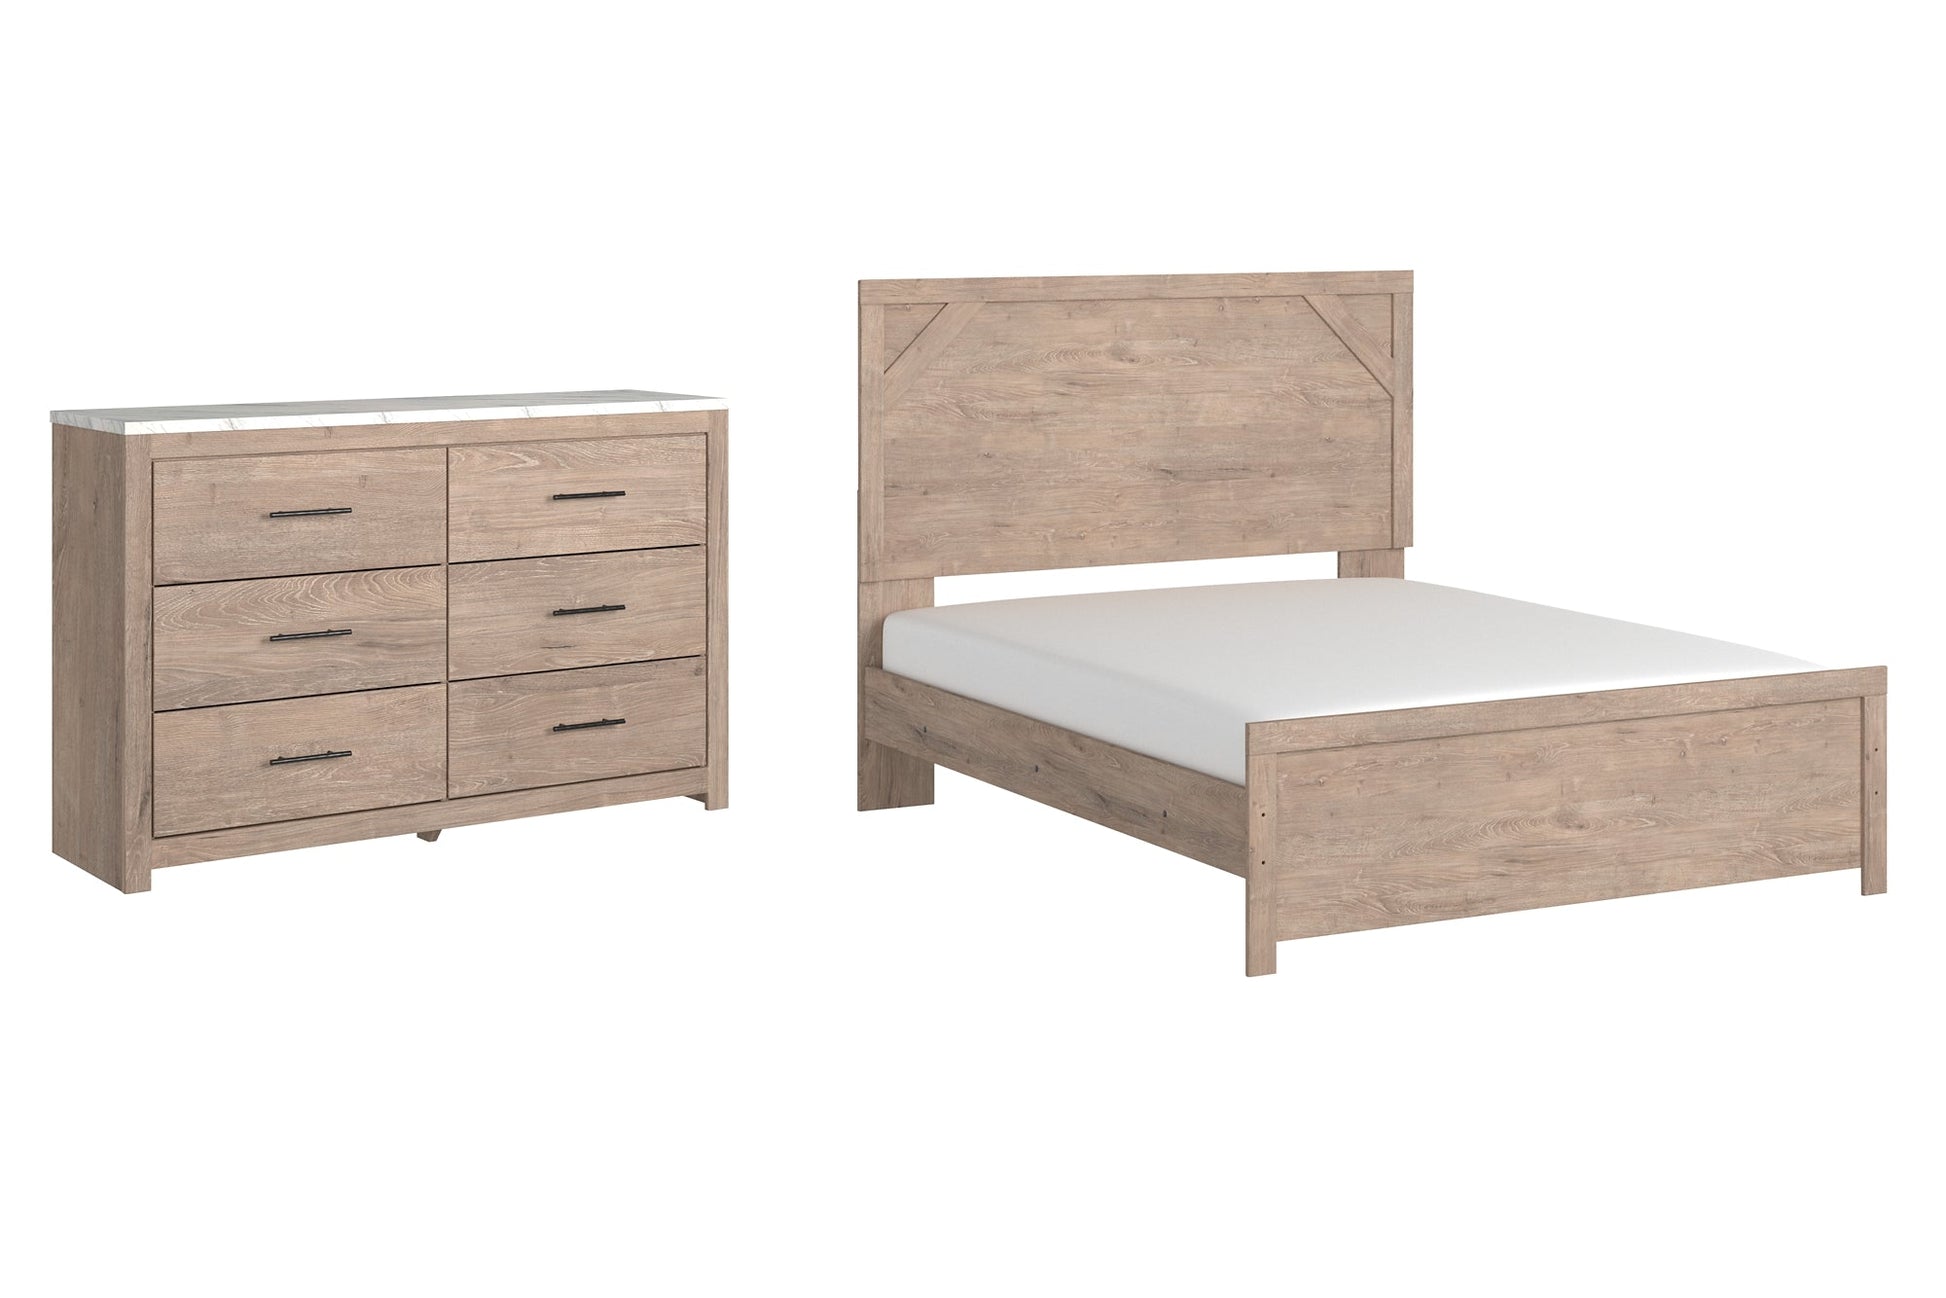 Senniberg Queen Panel Bed with Dresser at Cloud 9 Mattress & Furniture furniture, home furnishing, home decor